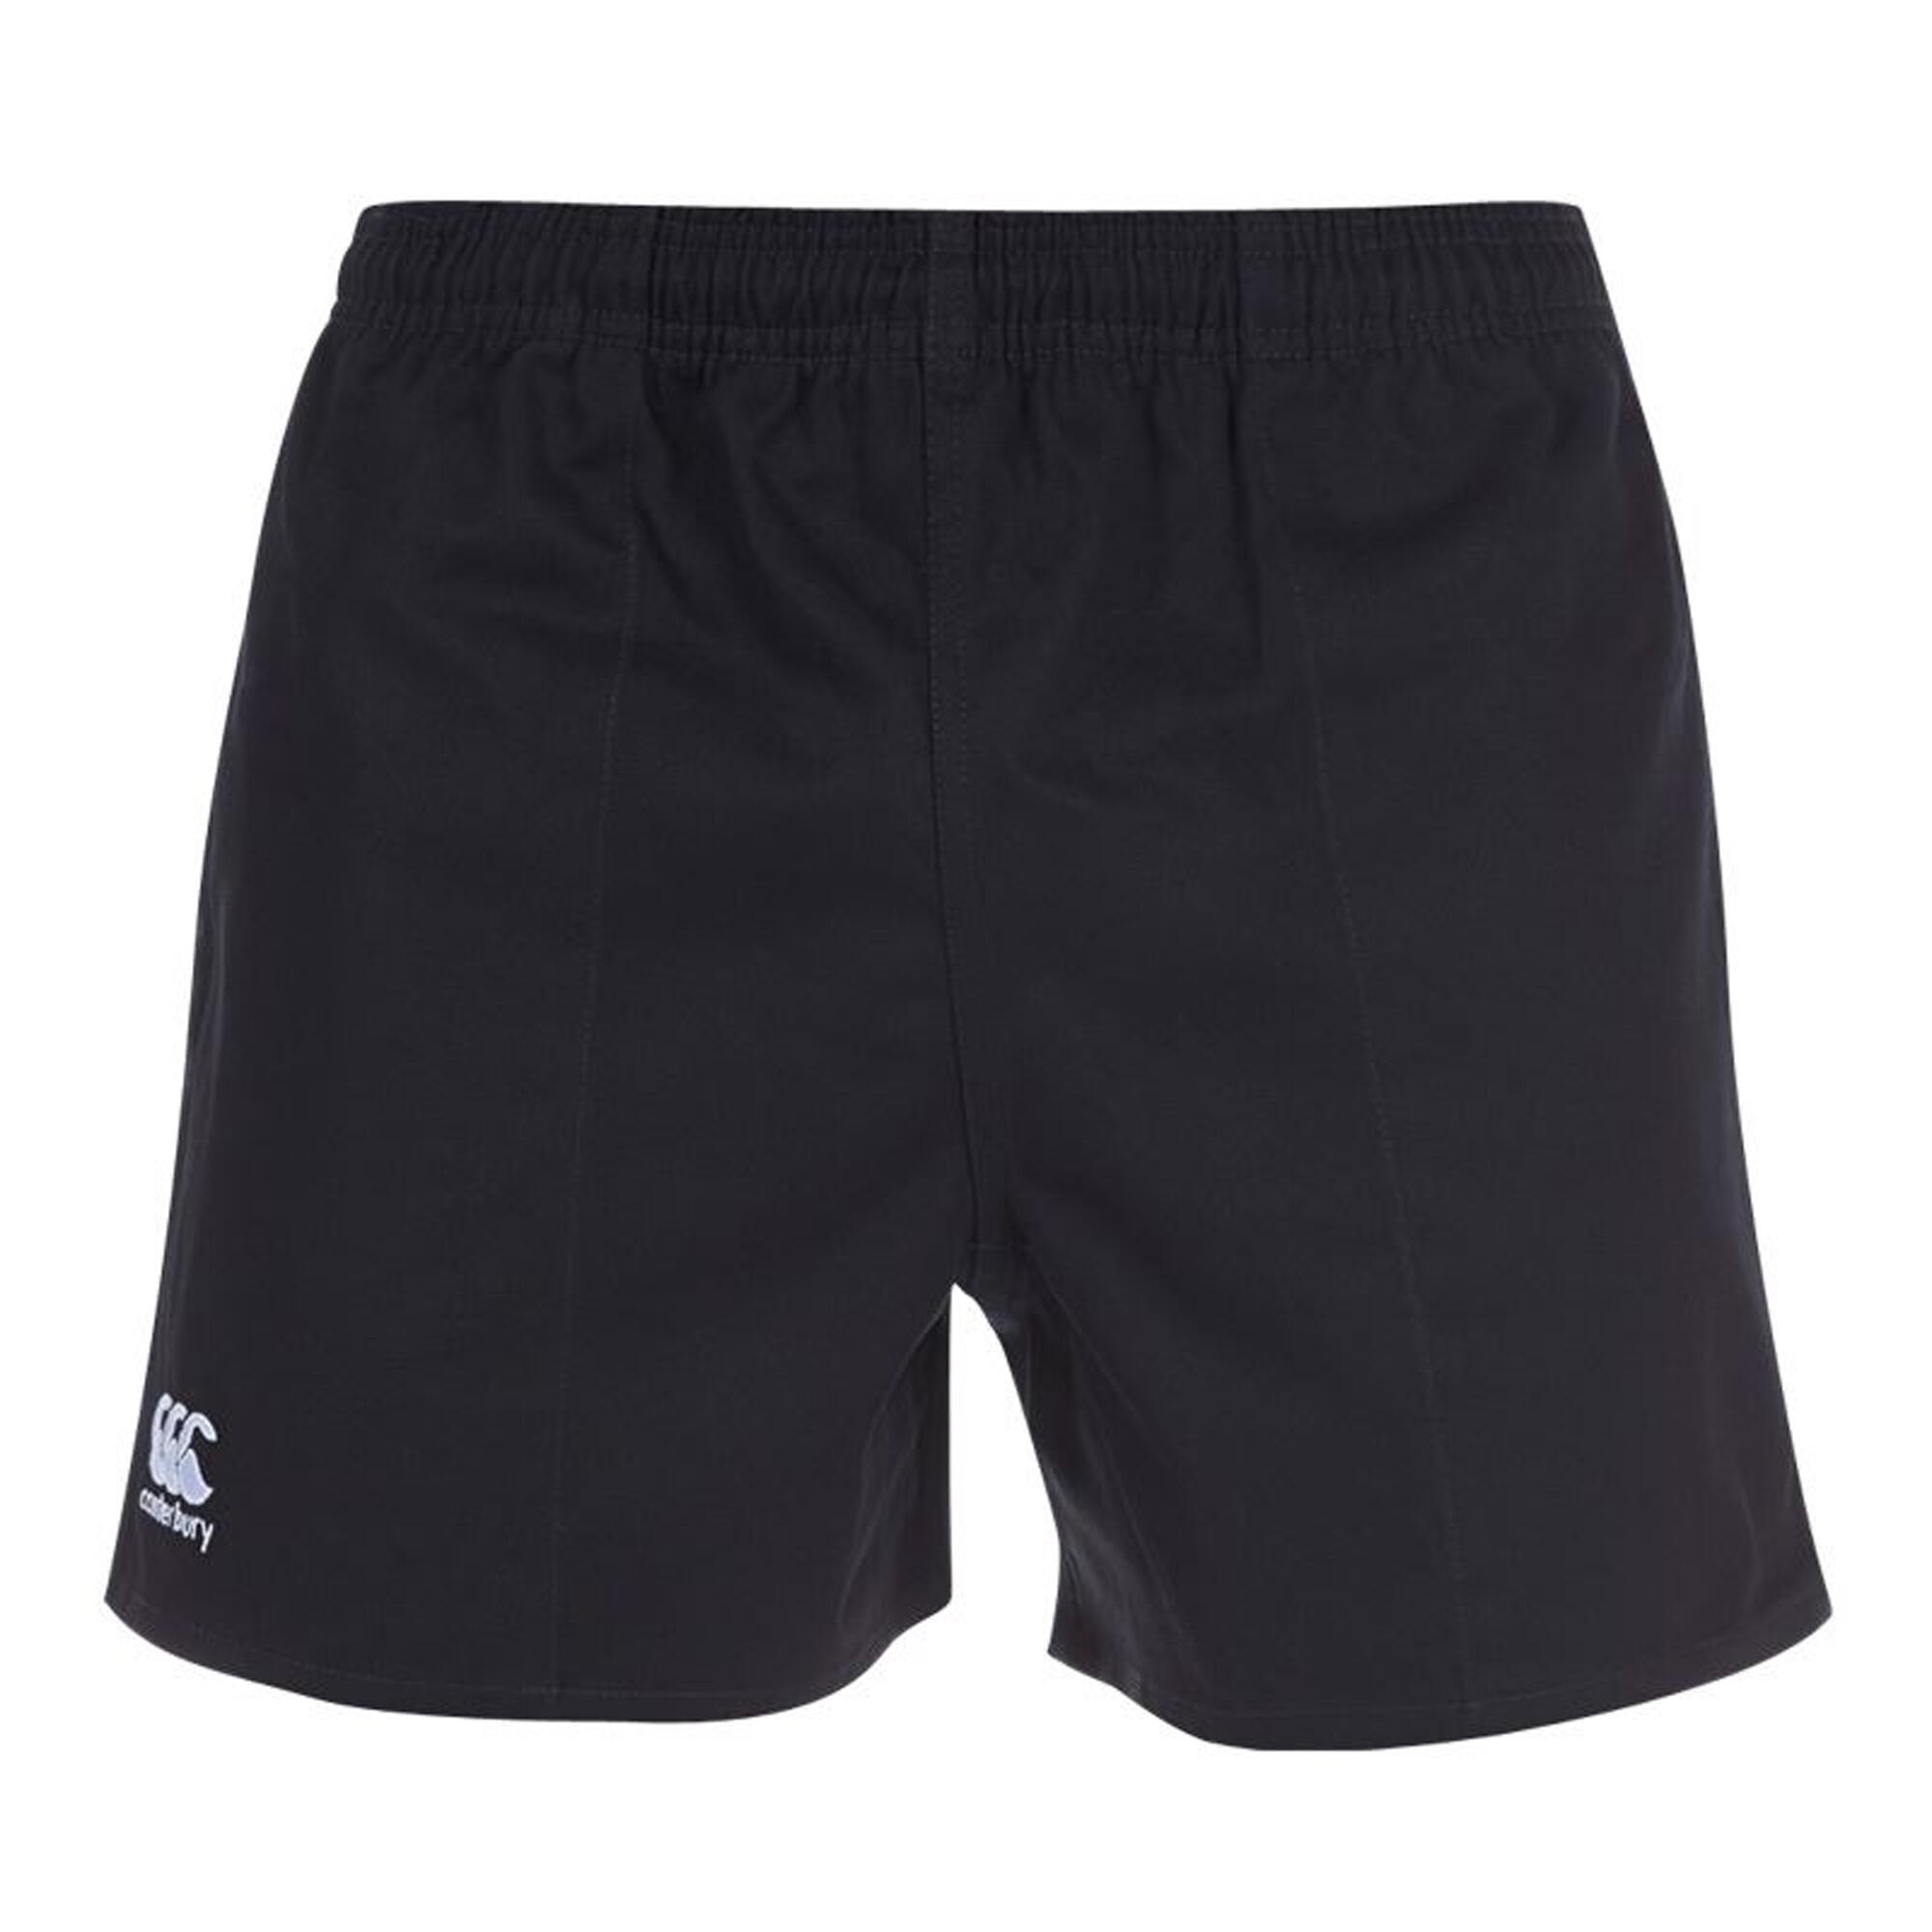 Childrens/Kids Professional Elasticated Sports Shorts (Black) 1/3